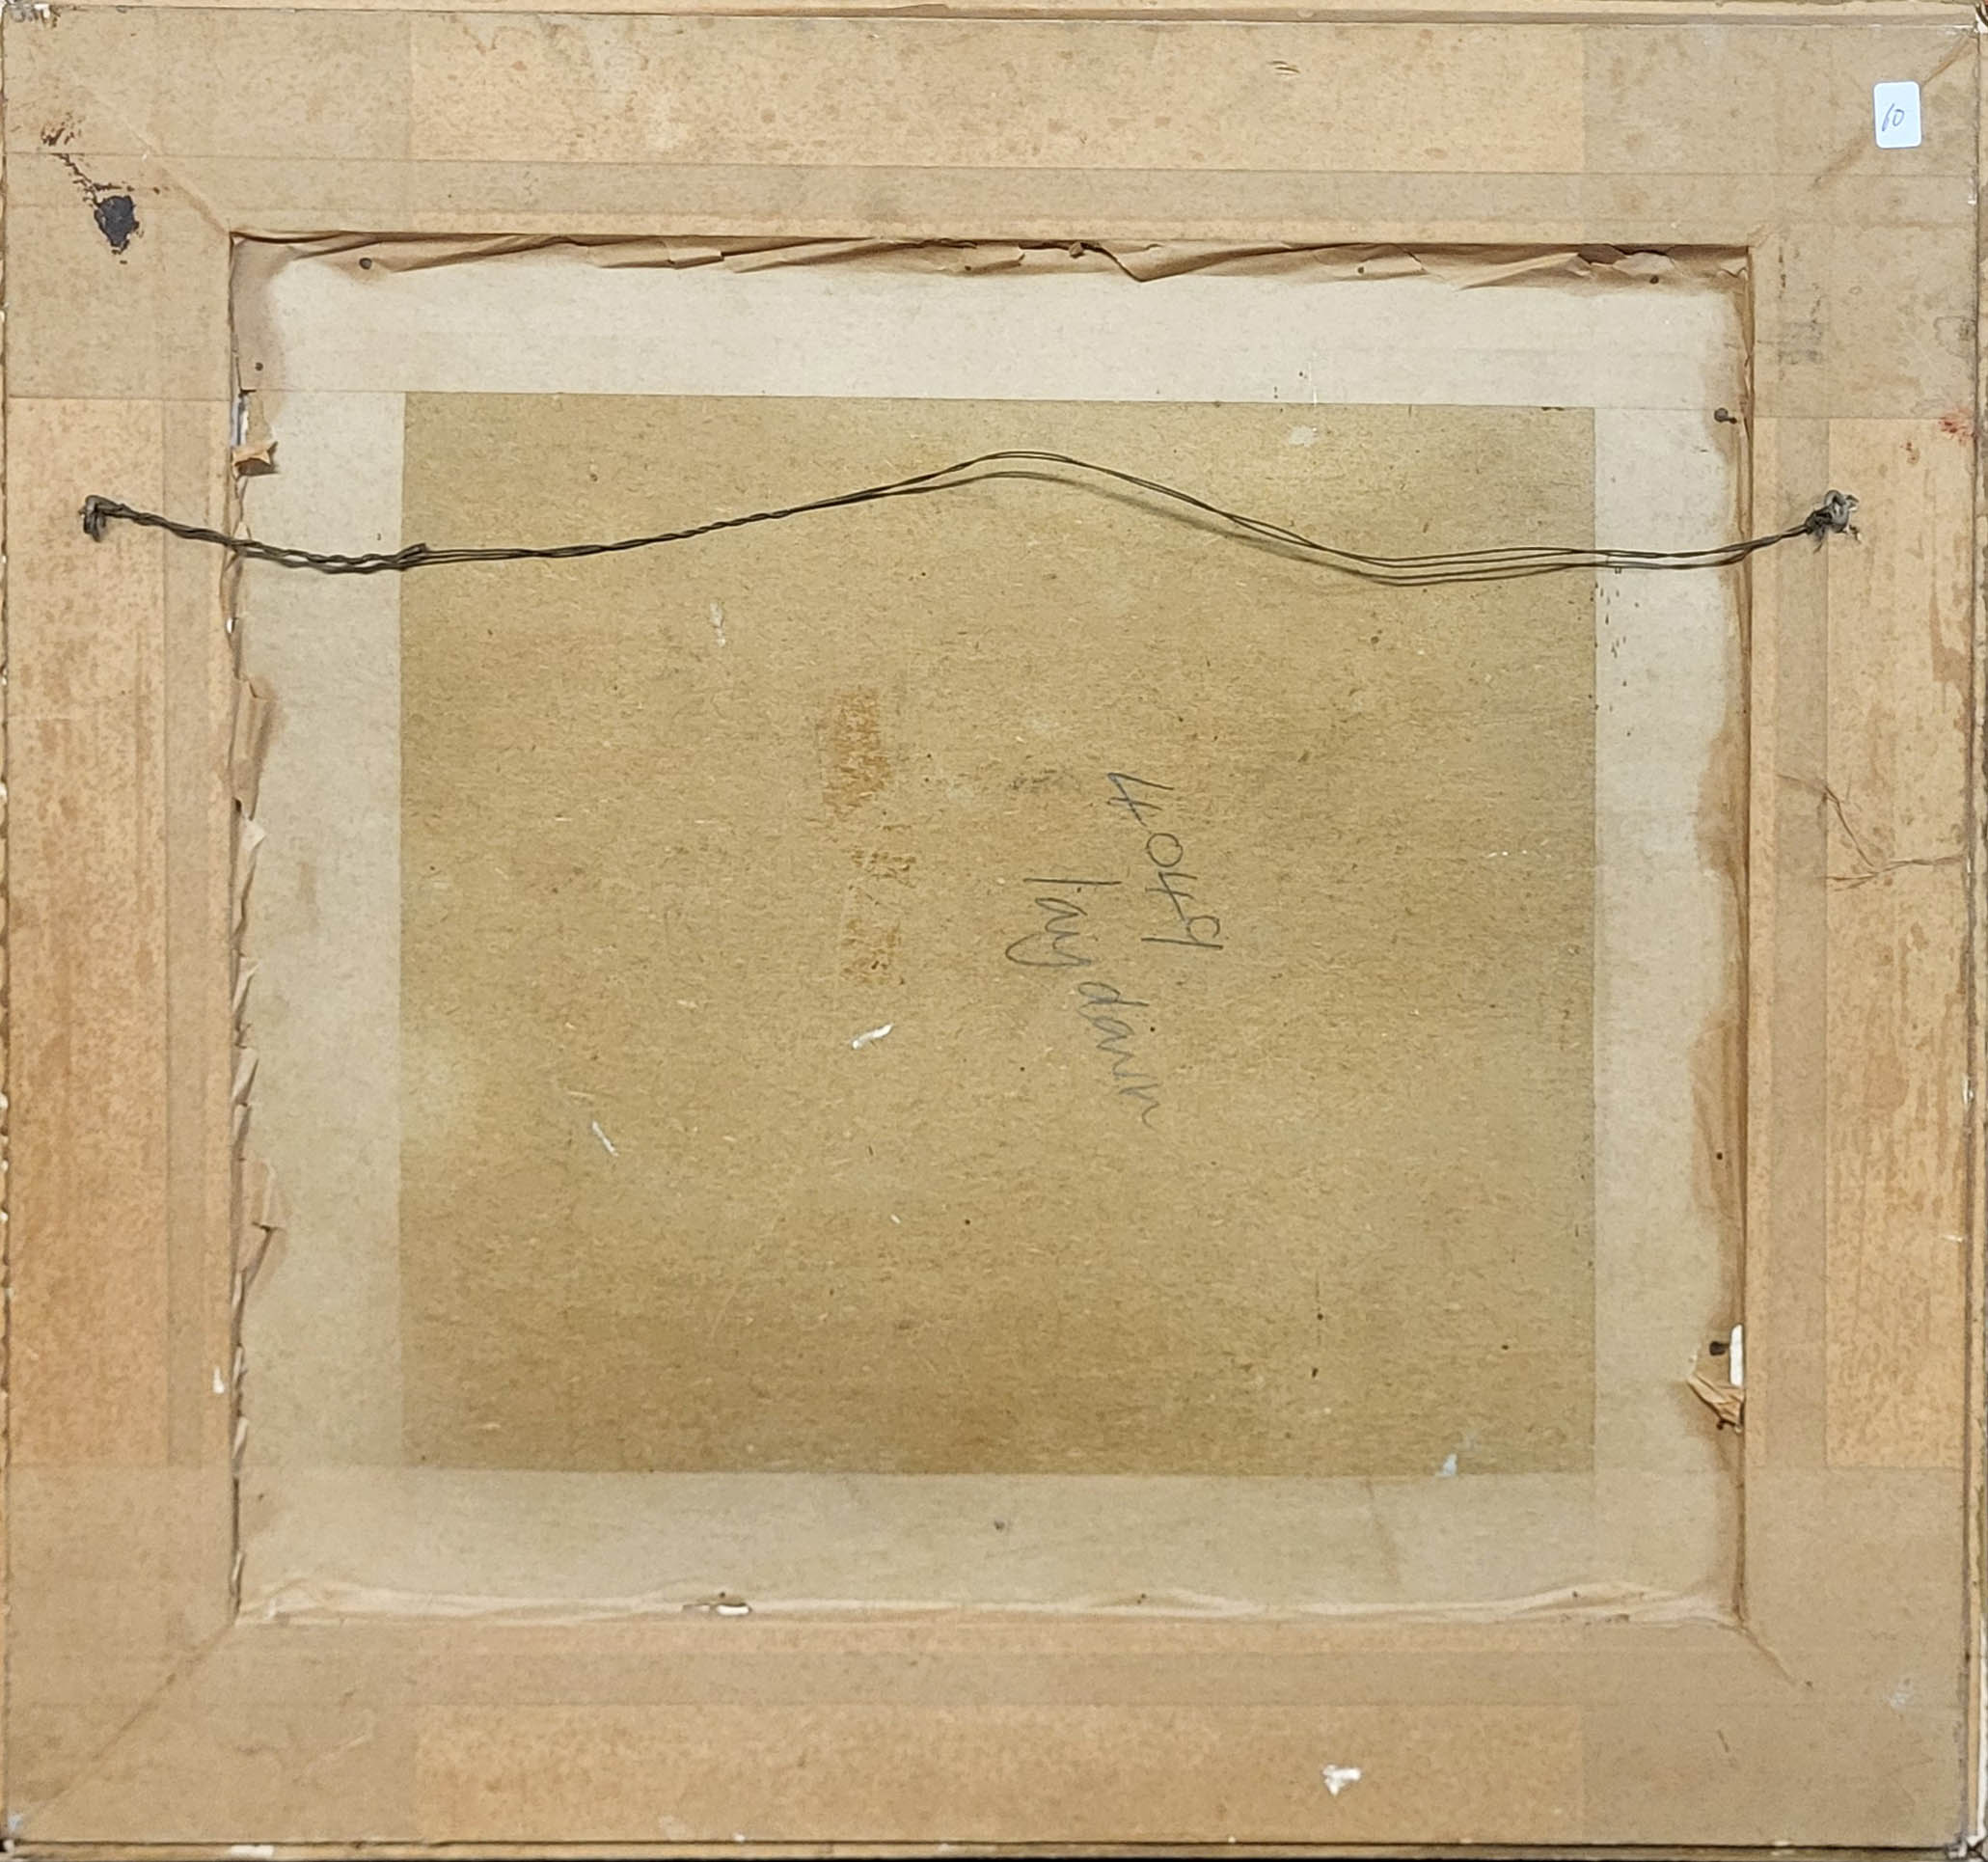 CEDRIC MORRIS?, OIL ON BOARD Italian Landscape, framed. 60cm x 57cm N.B. possibly Cedric Morris as - Image 6 of 6